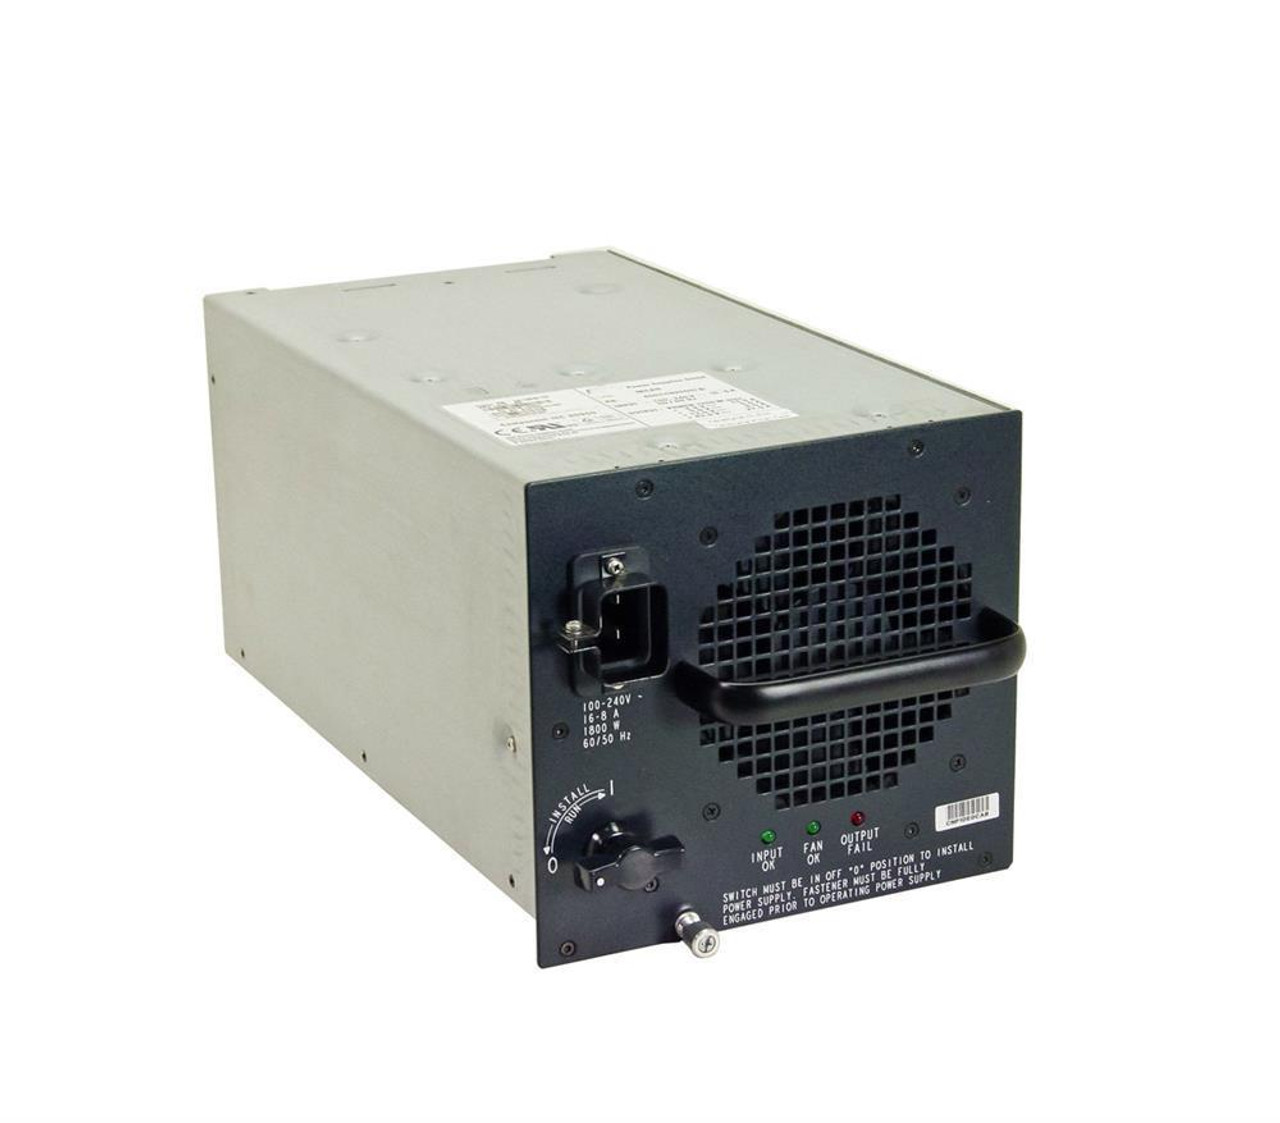 WSCAC1300 Cisco Power Supply (Refurbished)